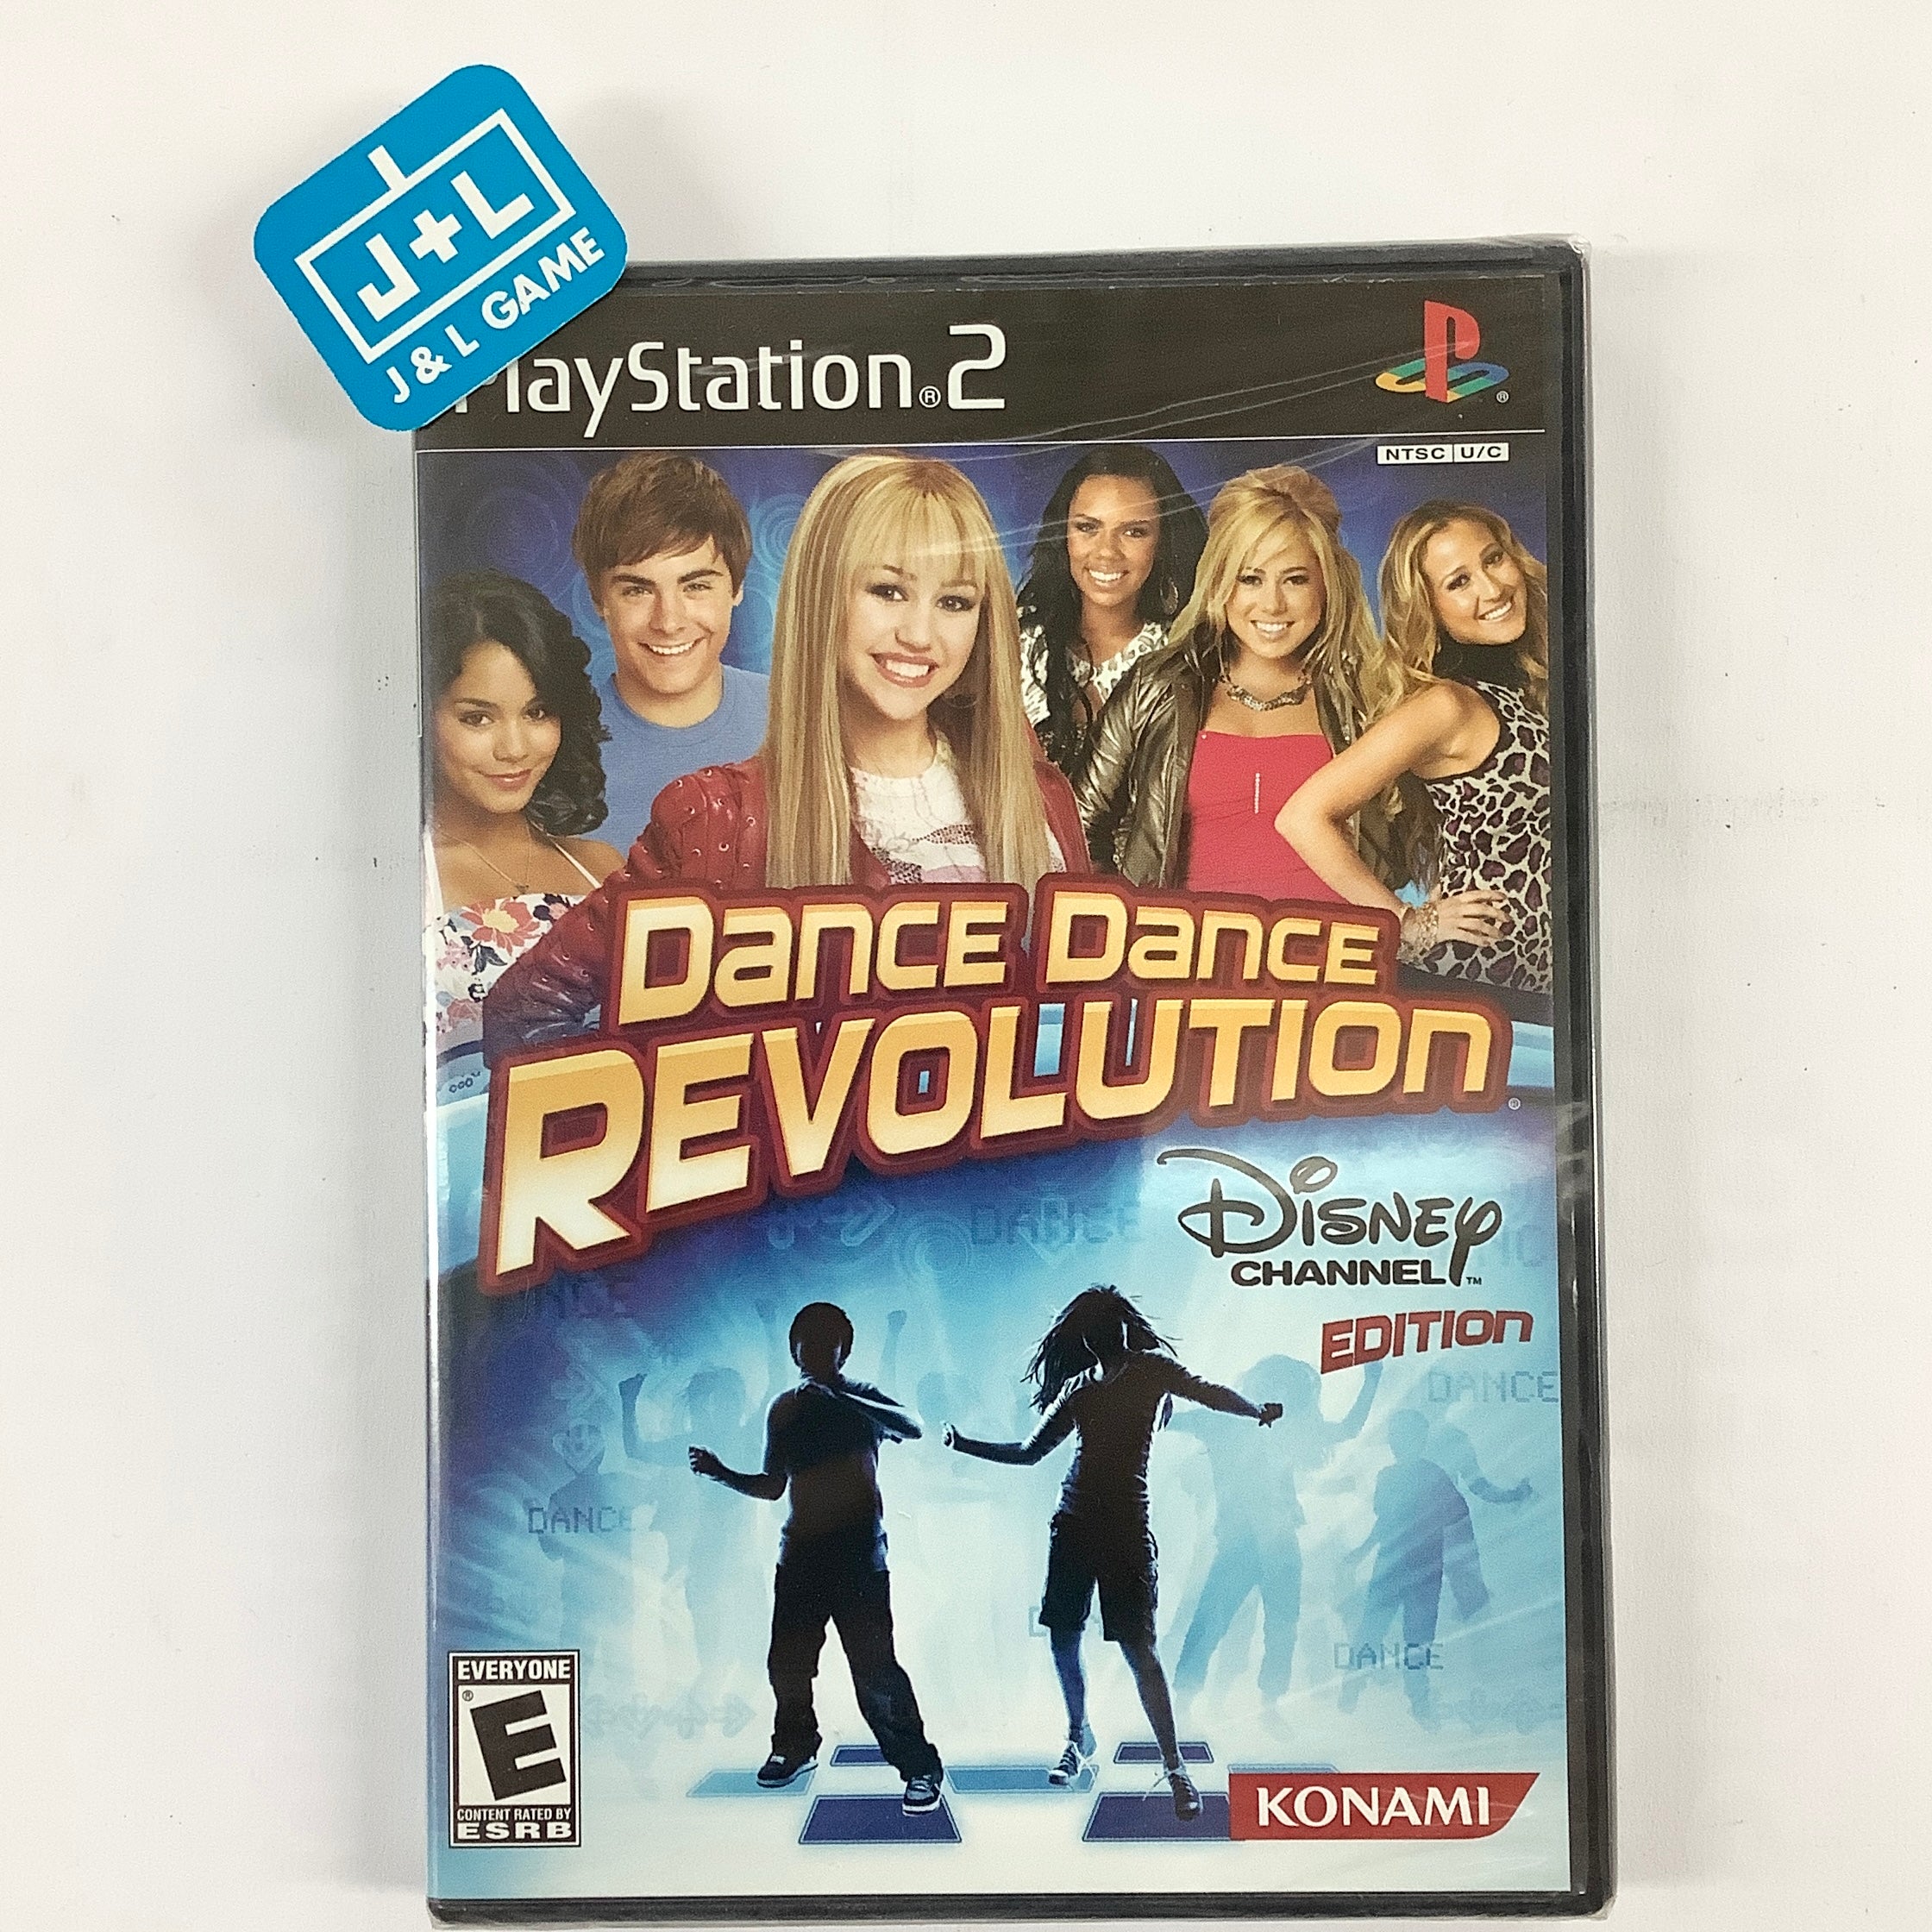 Dance Dance Revolution: Disney Channel Edition - (PS2) PlayStation 2 Video Games Disney Interactive Studios(World)   